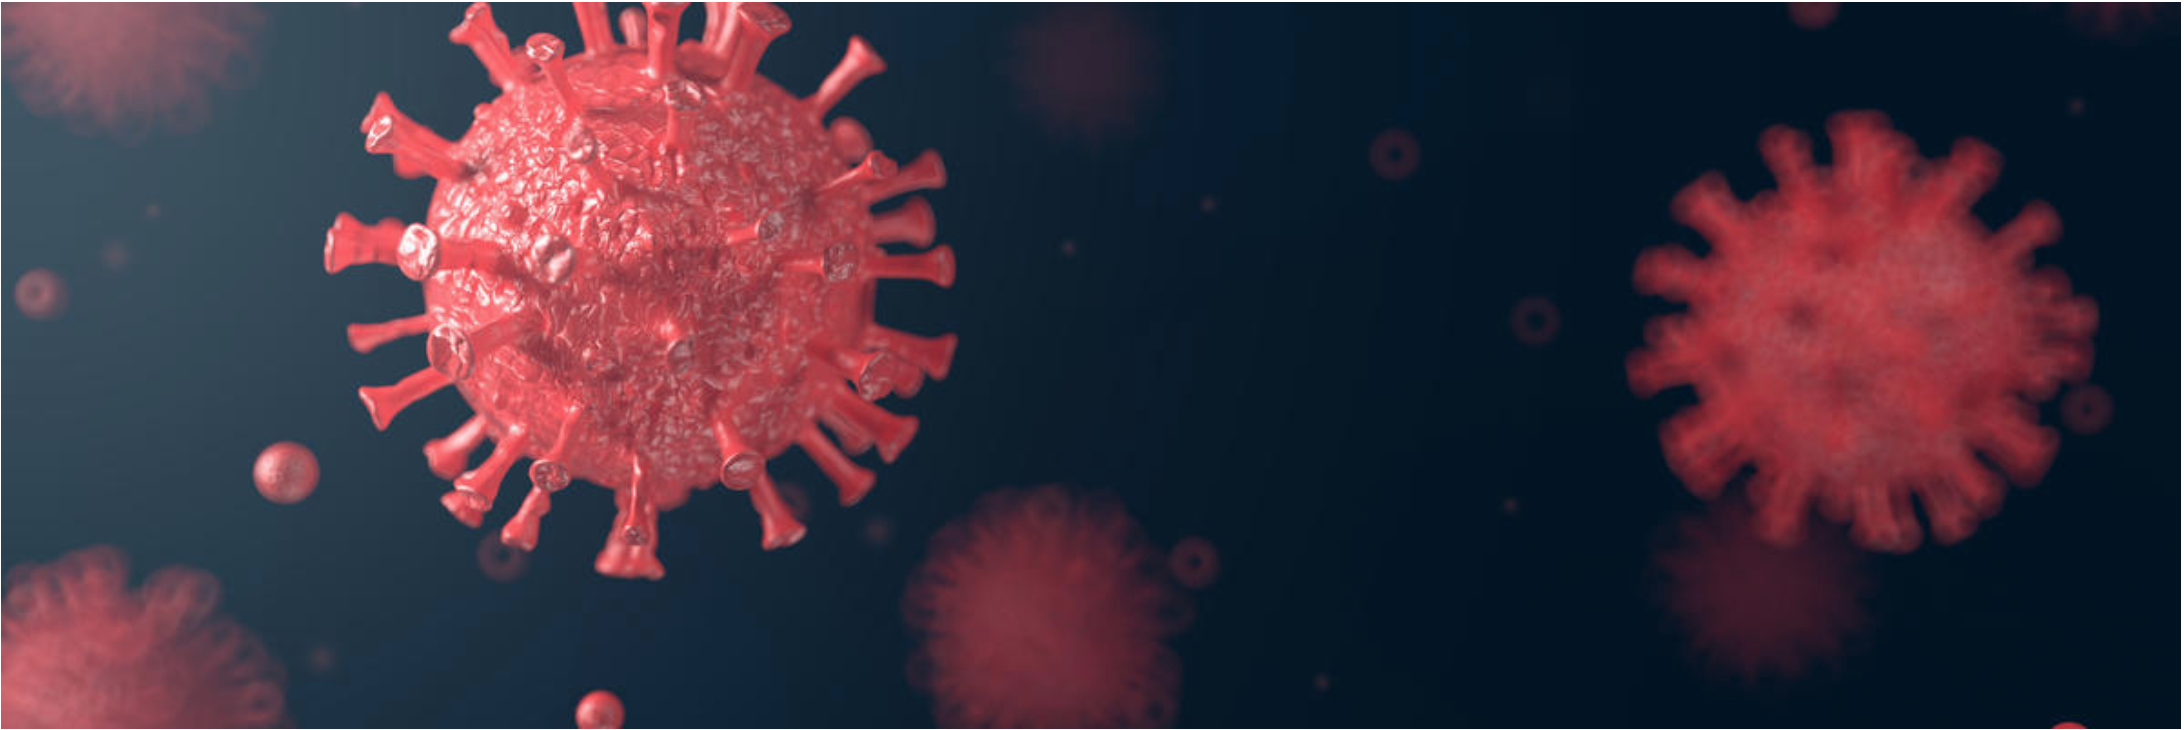 Visual representation of the Covid-19 virus